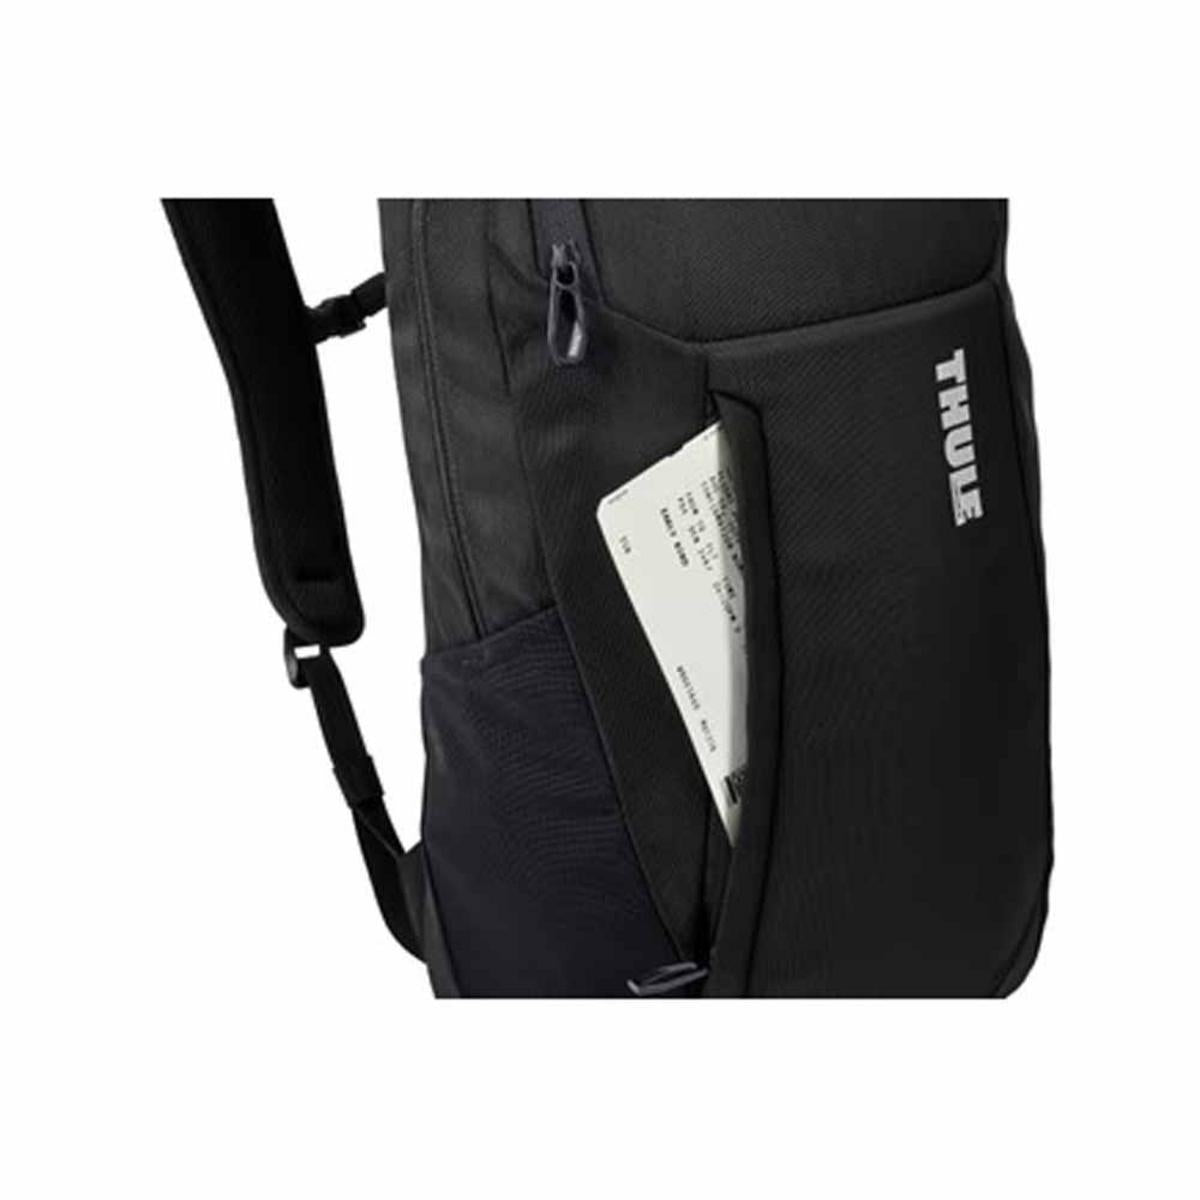 Thule Accent 20L Laptop Backpack - Black